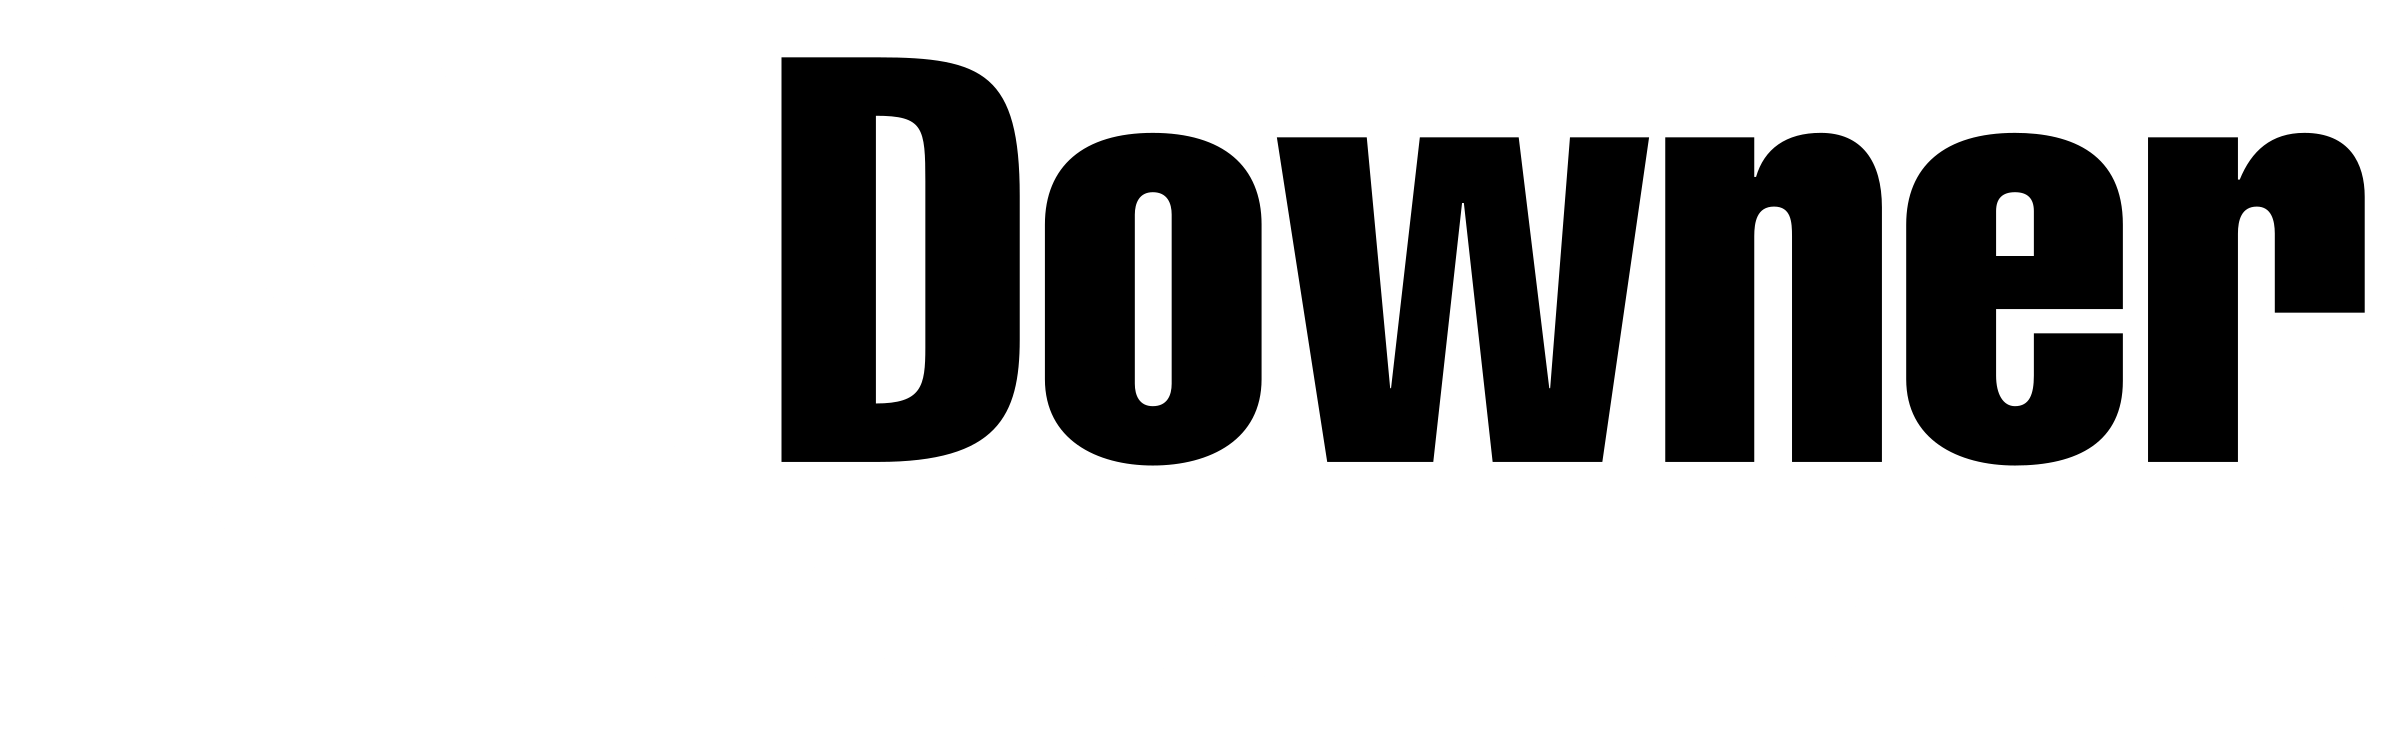 downer-group-logo-black-and-white